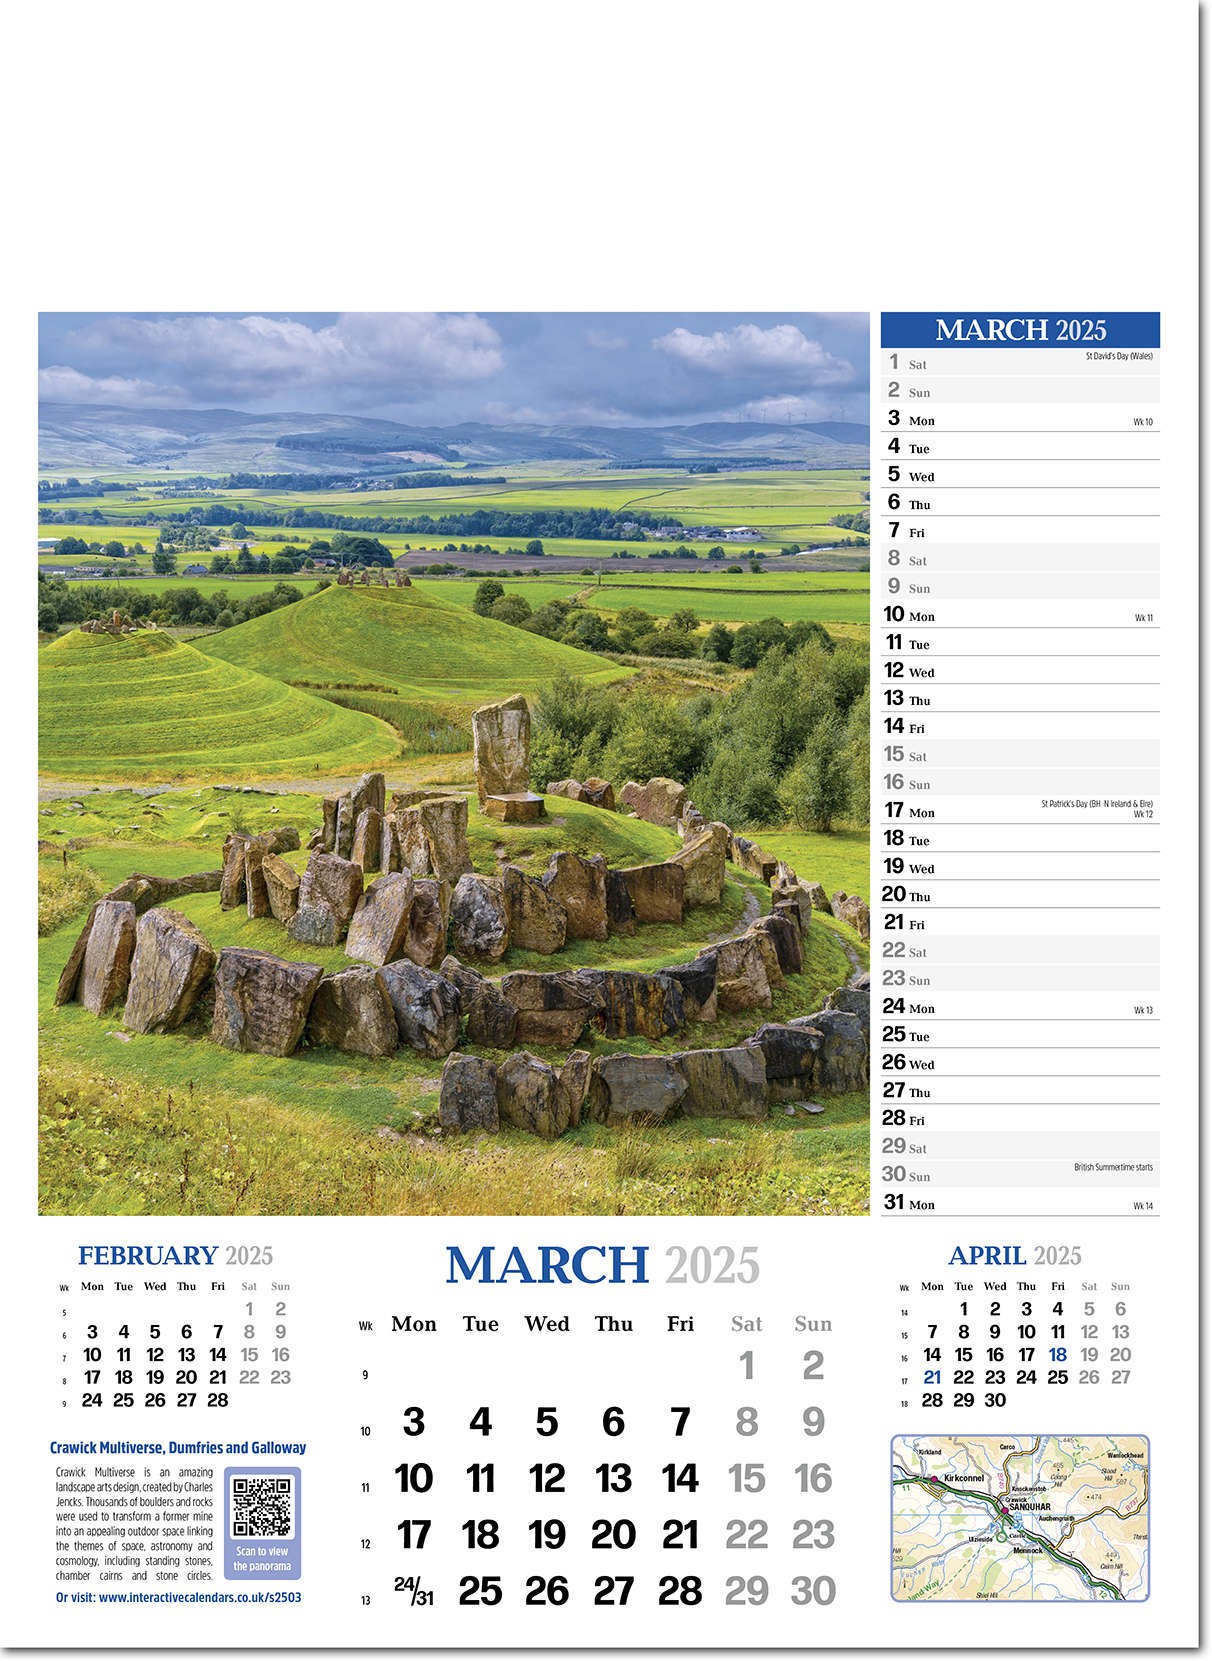 Splendour of Scotland Calendar